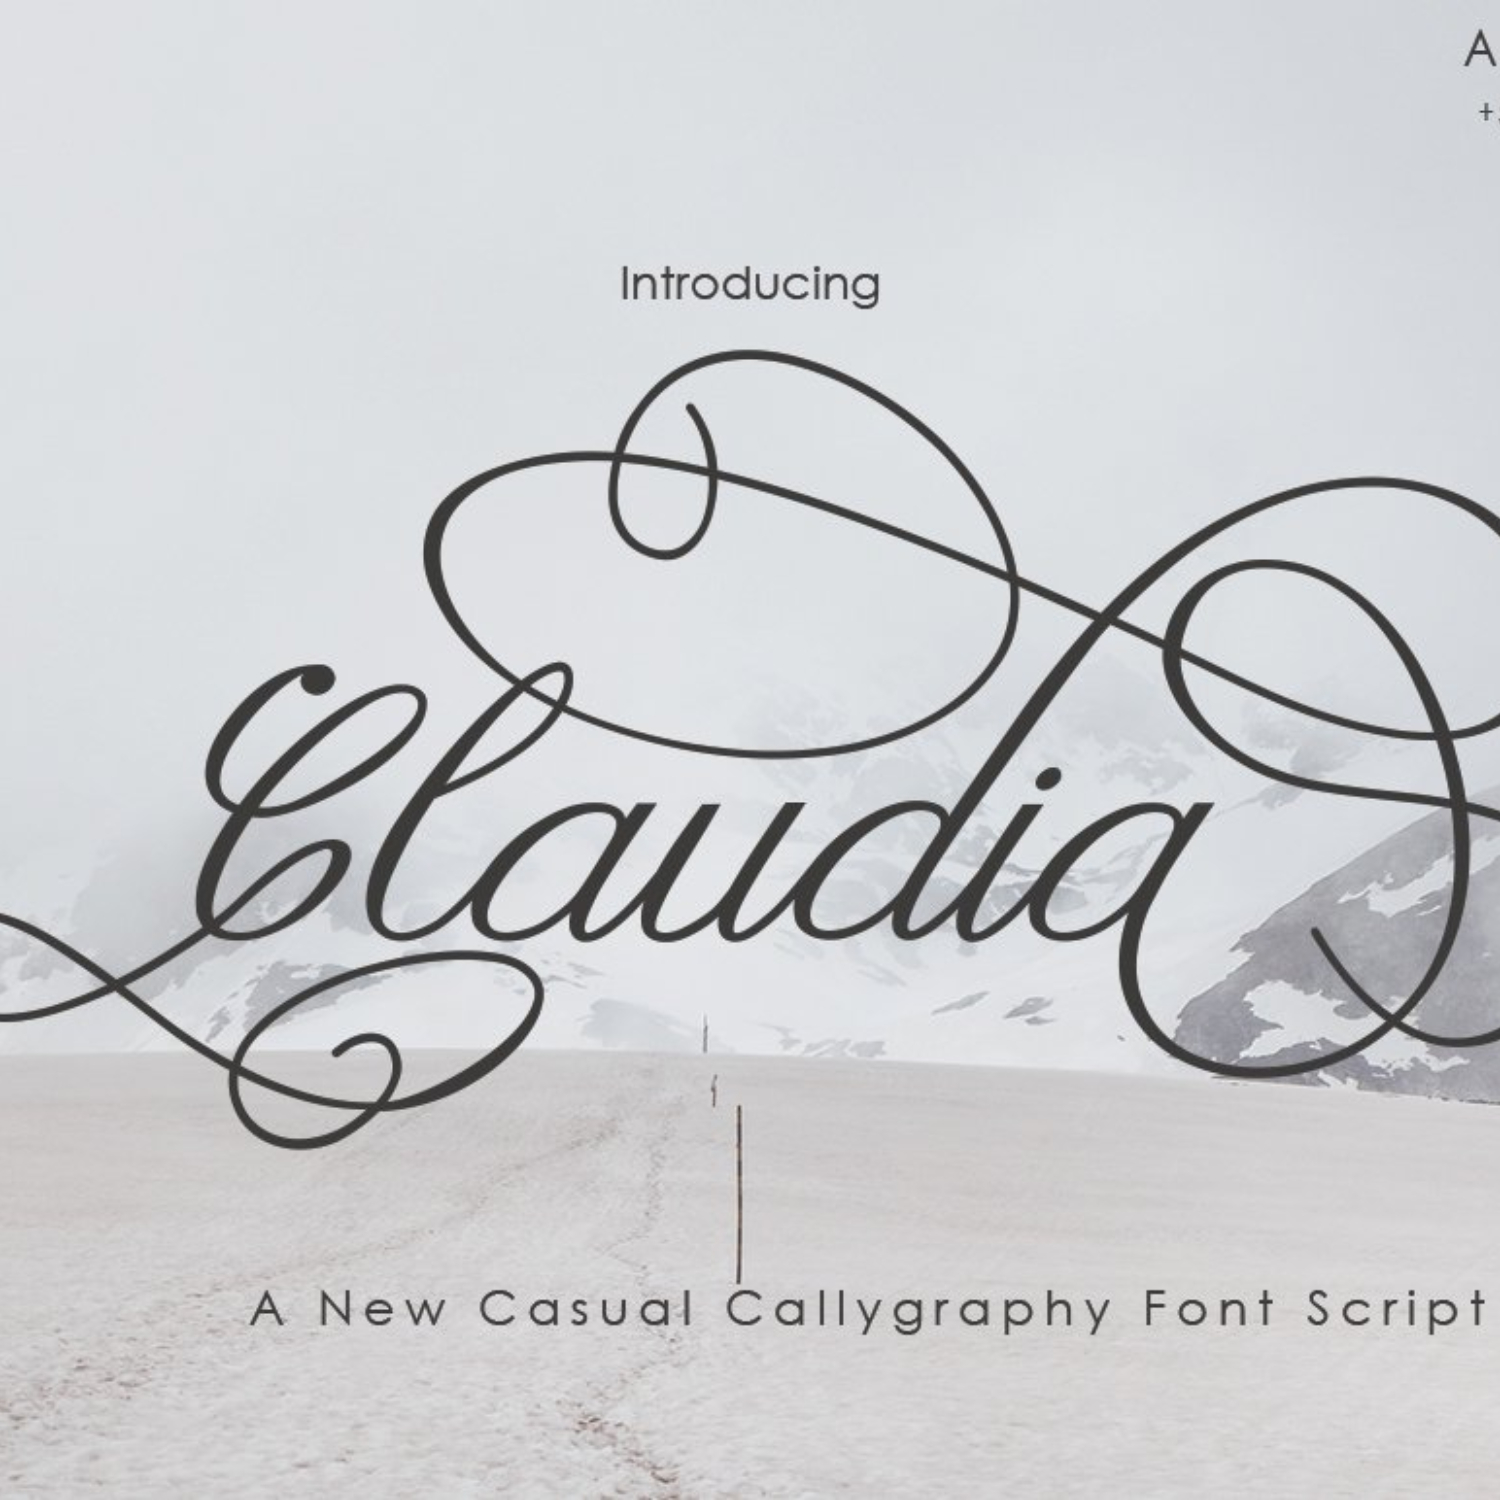 Claudia Calligraphy.